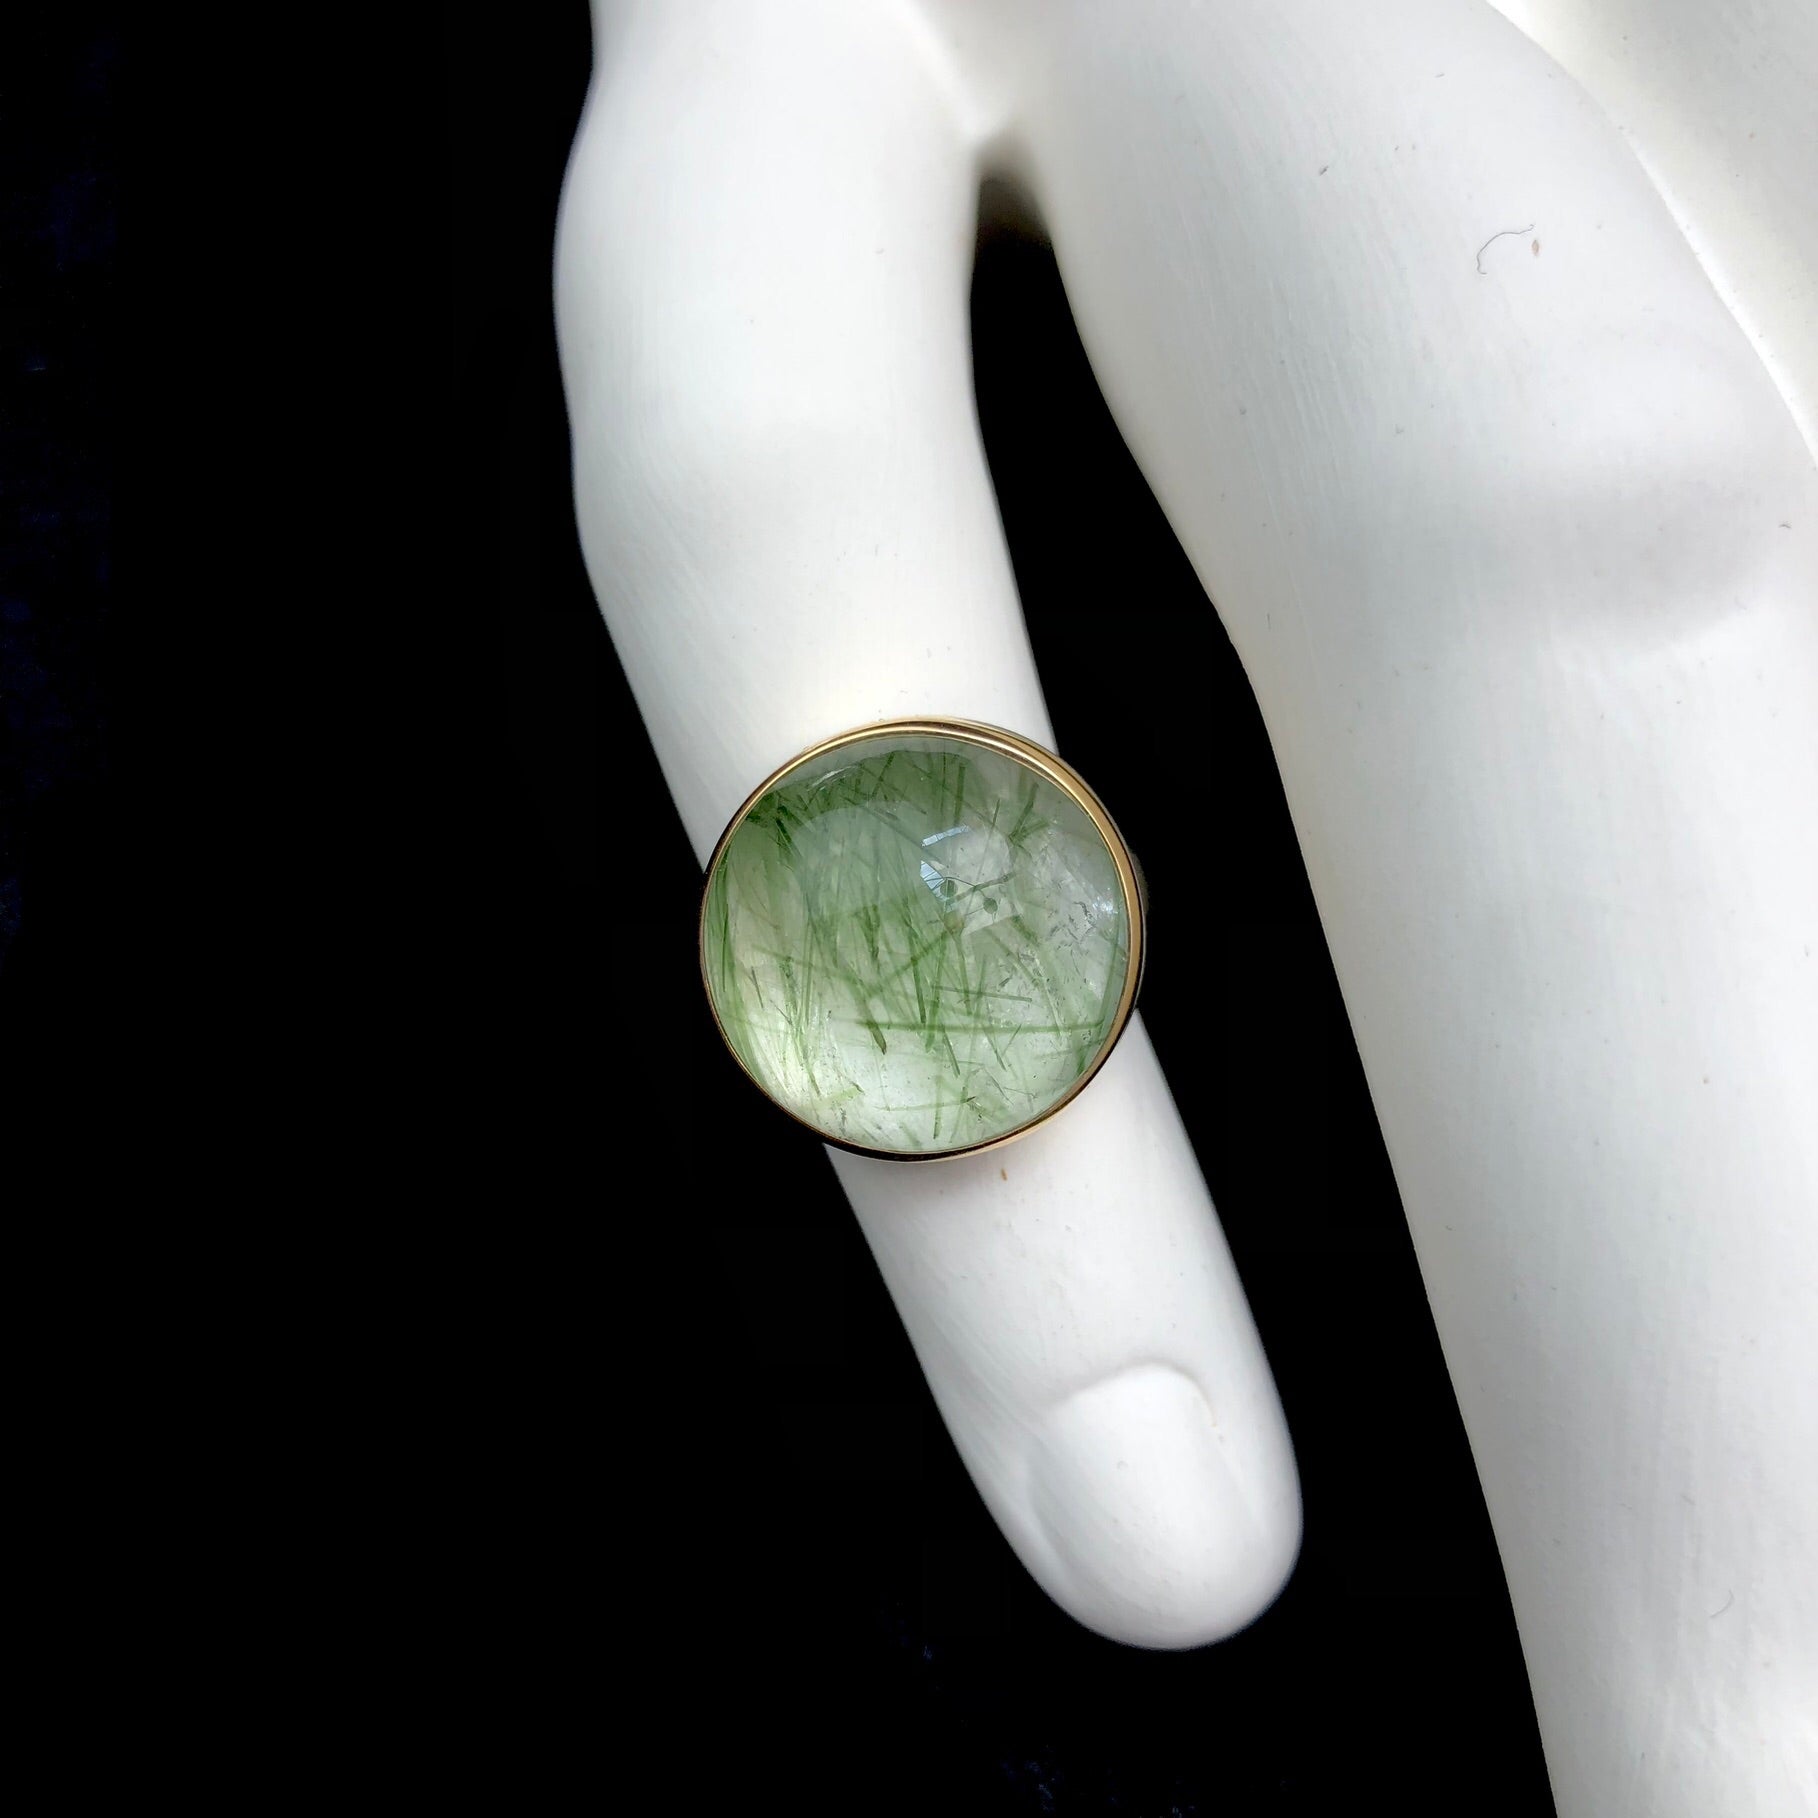 Round, light green prehnite stone shown on white ceramic finger